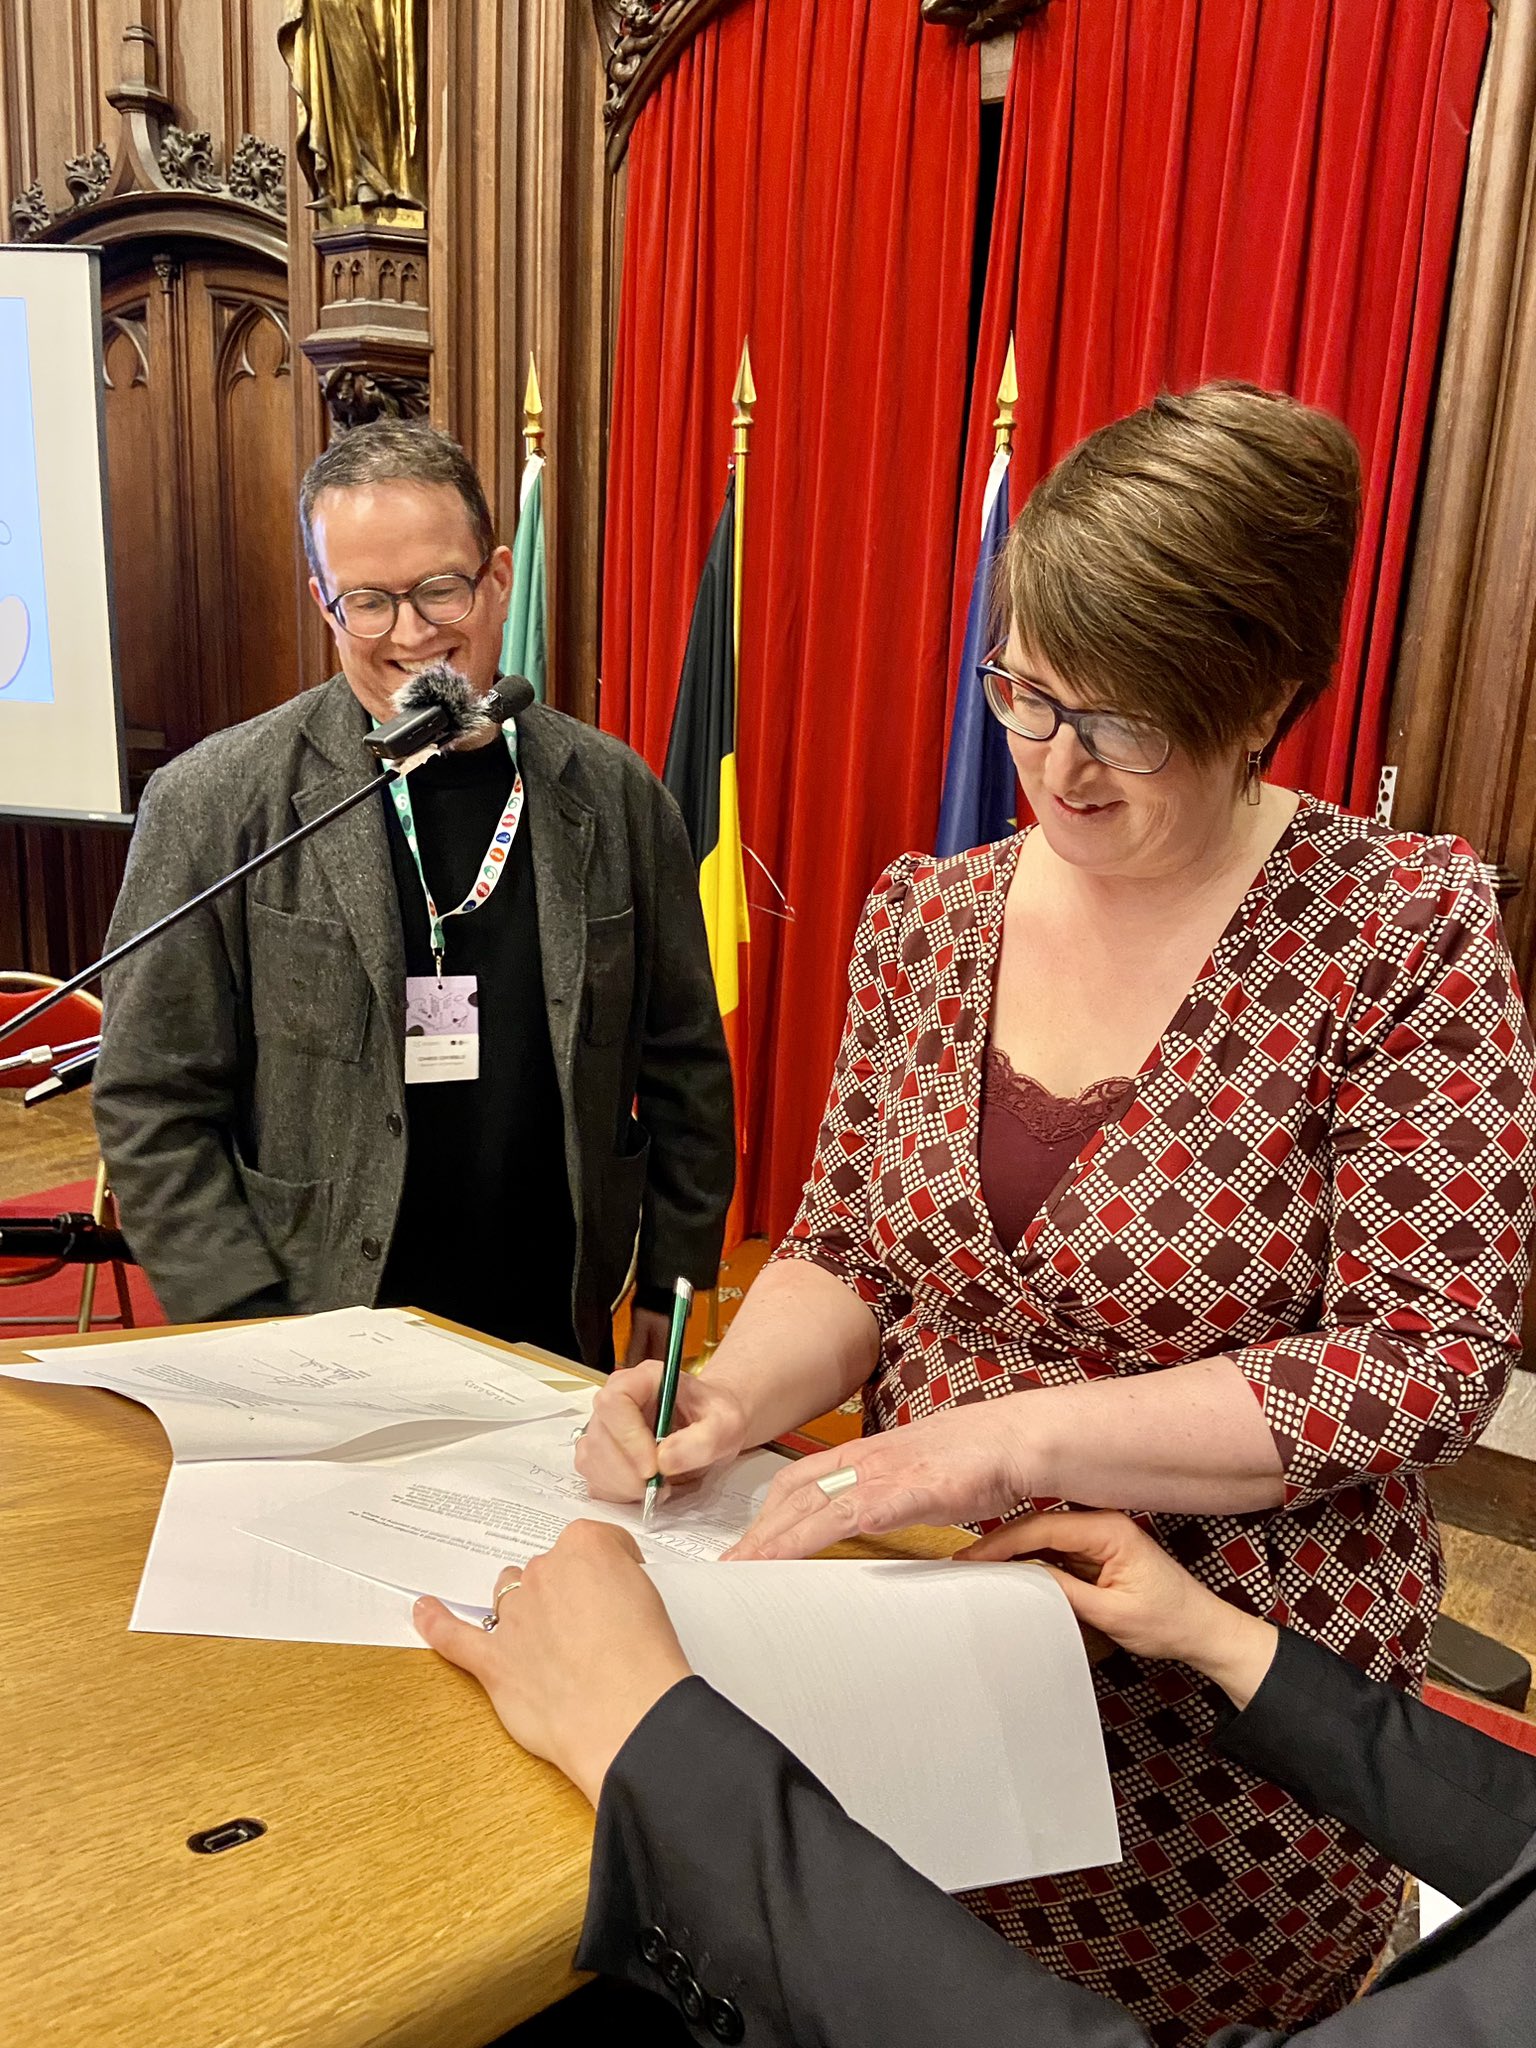 Deputy Mayor Lies Corneillie signing the ICORN Membership Agreement on behalf of the City of Leuven. Photo: Delphine Houba, Twitter. 